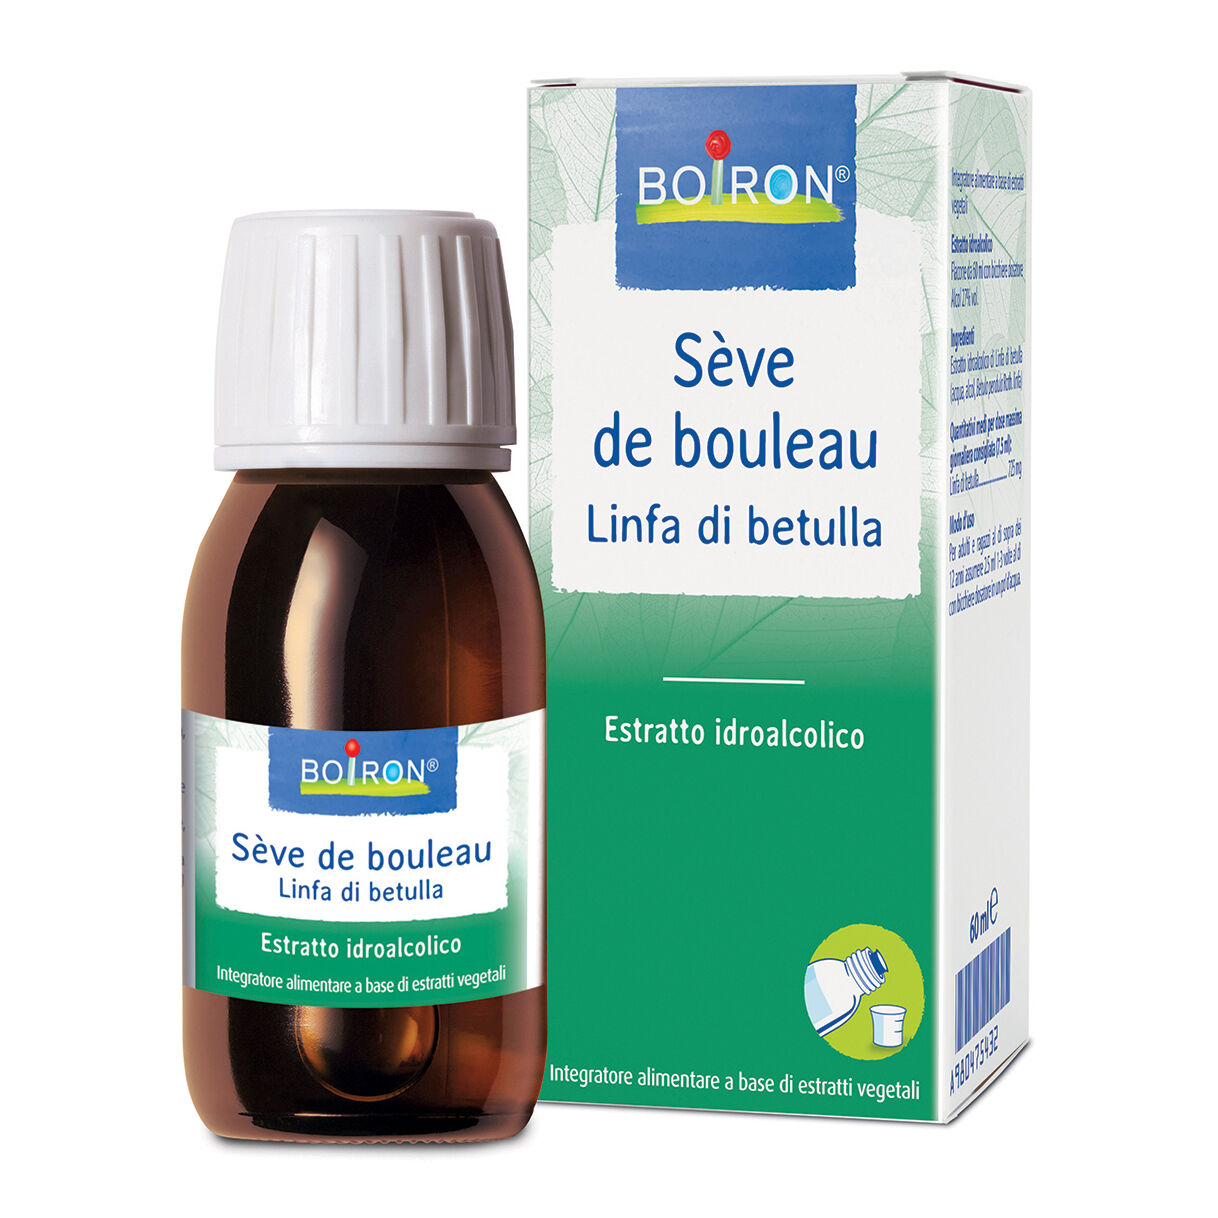 BOIRON Seve de bouleau estratto idroalcolico 60 ml